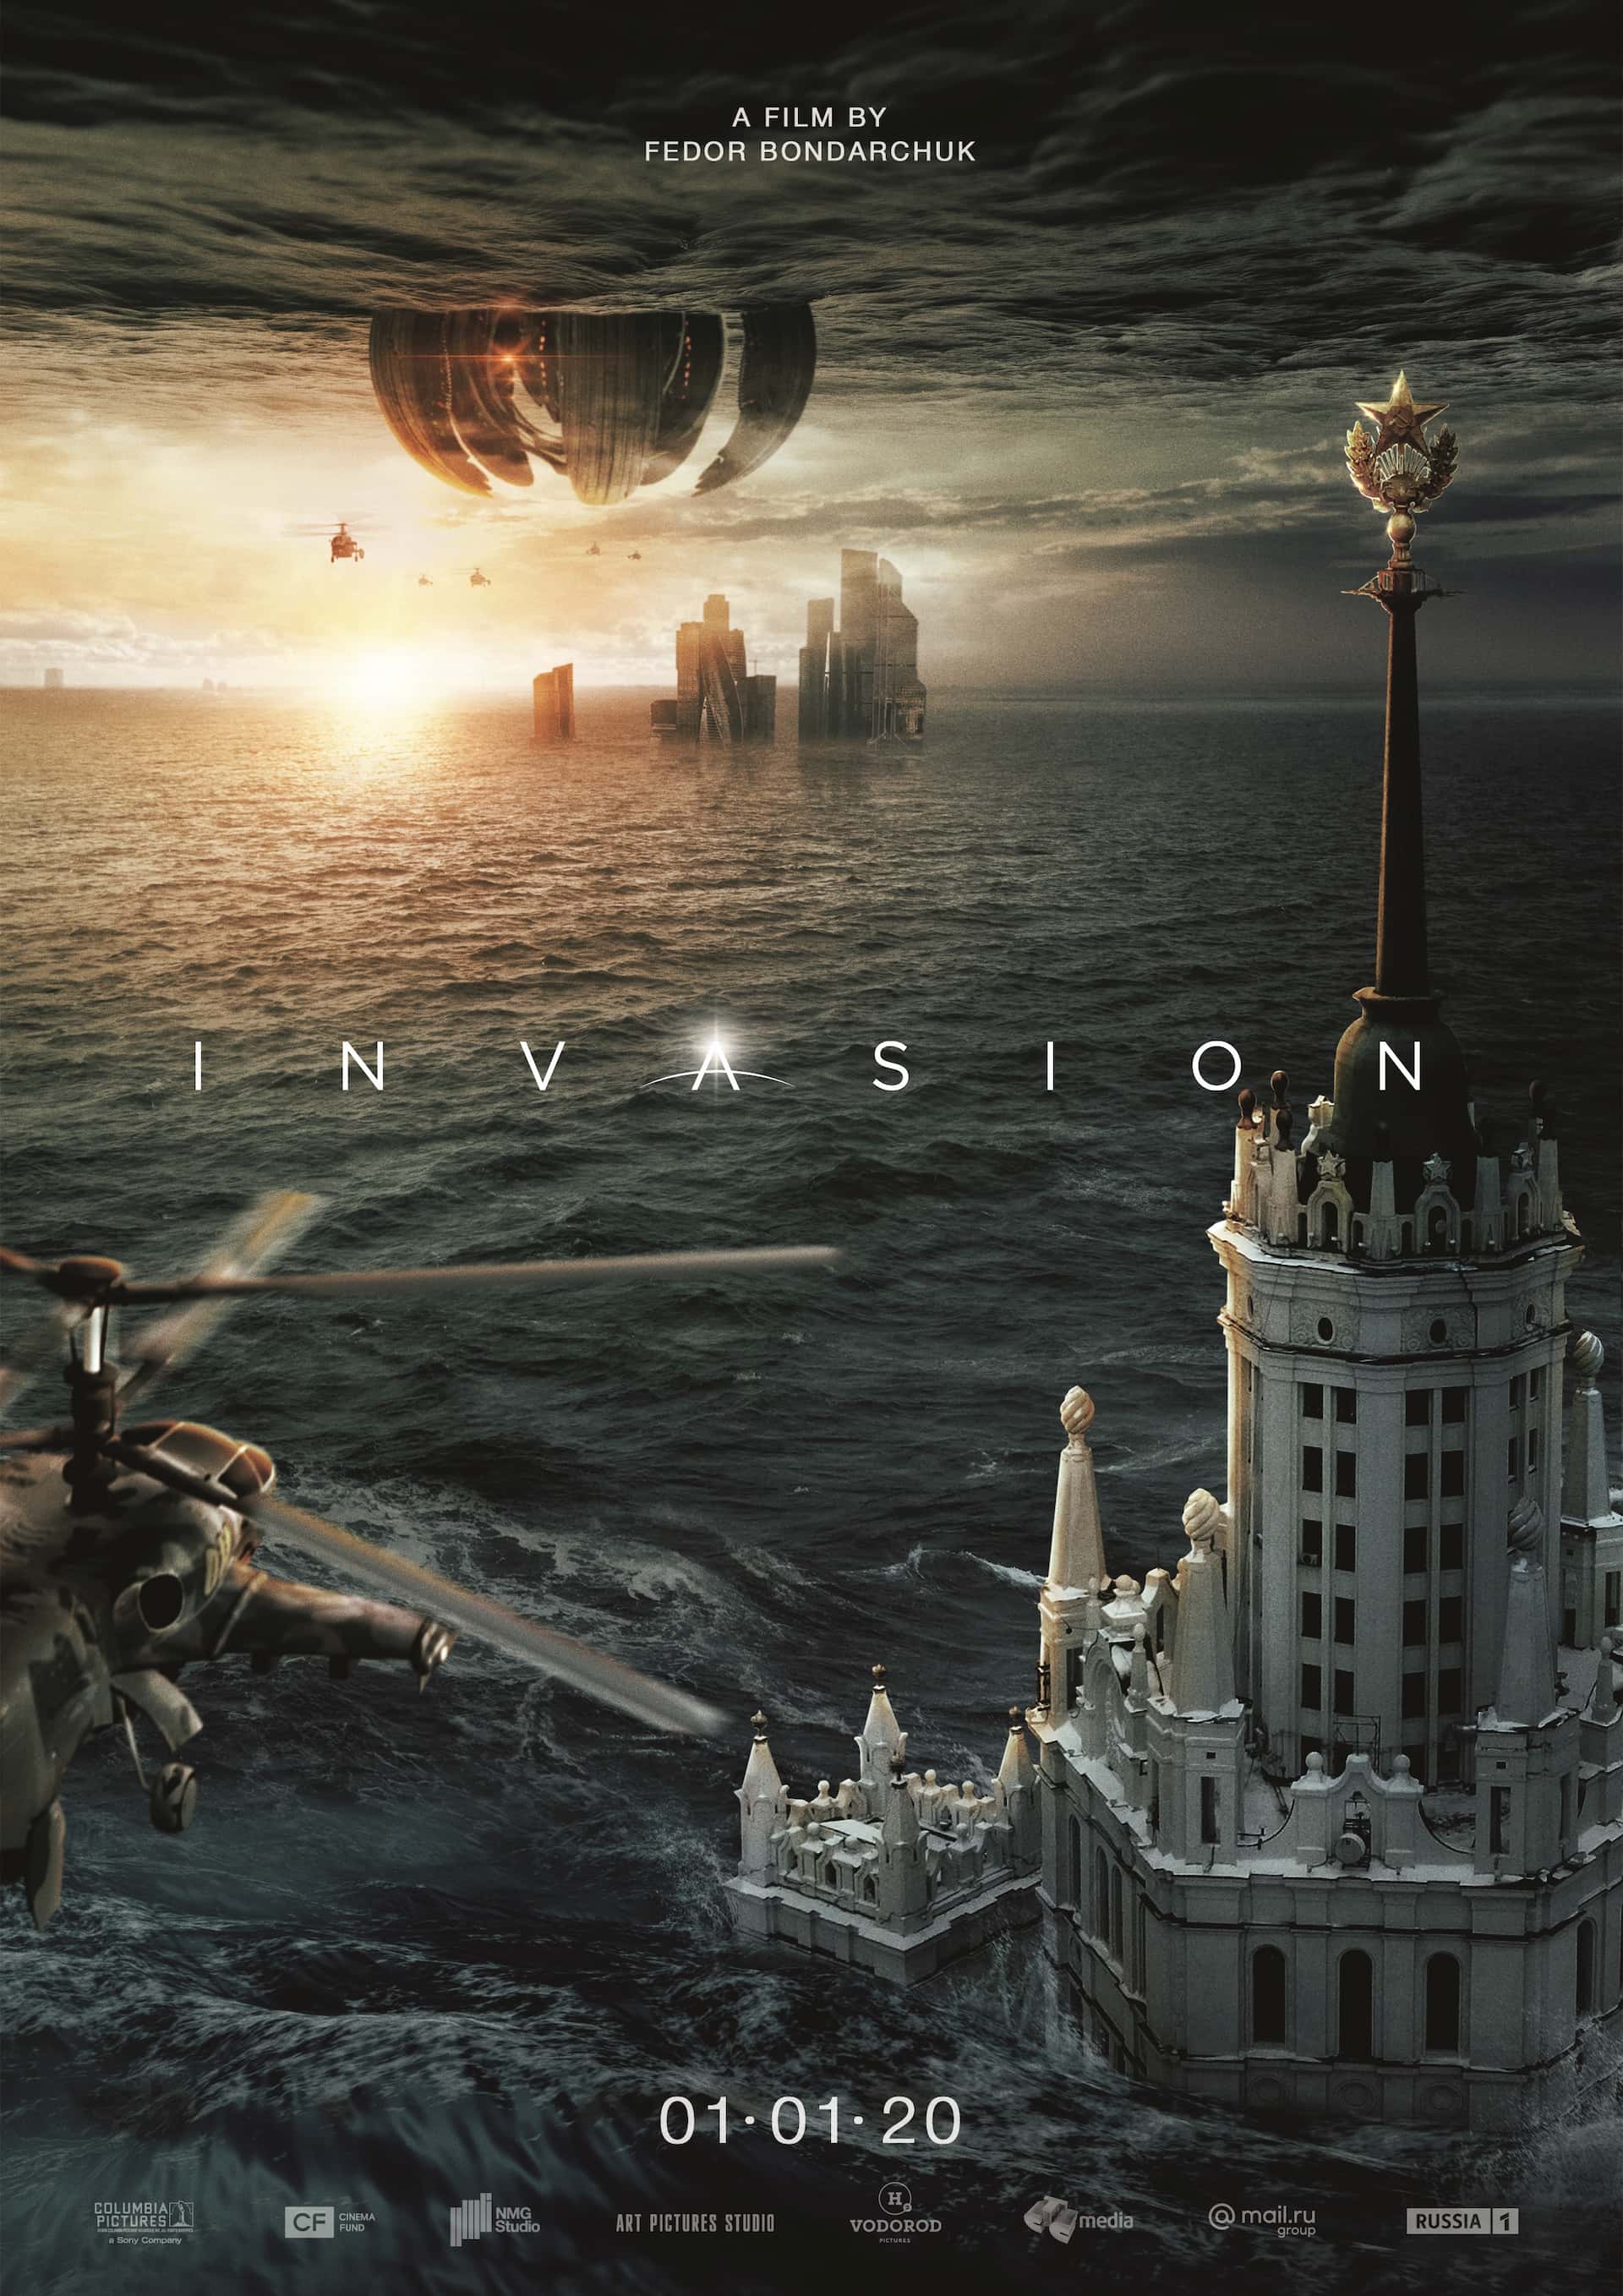 Attraction 2 Invasion (2020) มหาวิบัติเอเลี่ยนล้างโลก